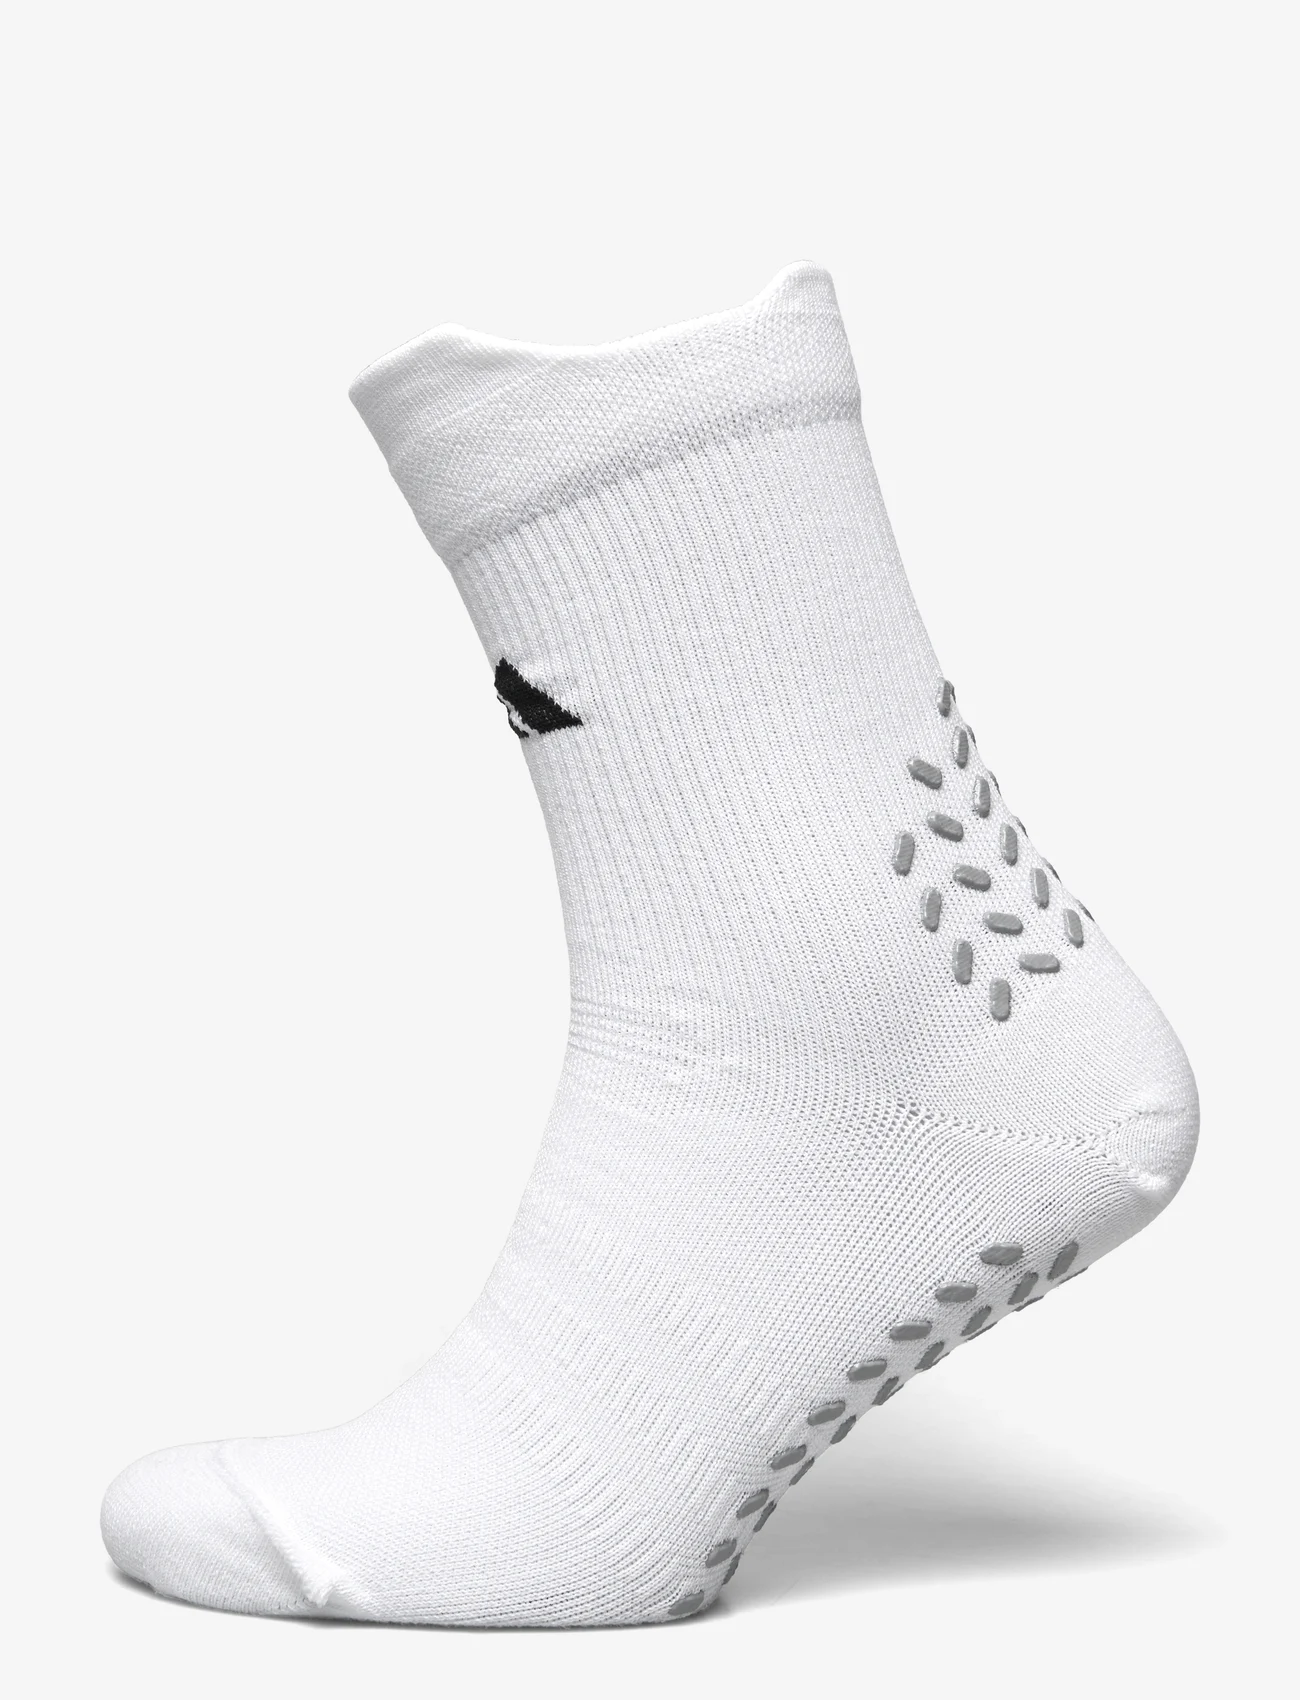 adidas Performance - Adidas Football GRIP Printed Crew Performance Socks Light - die niedrigsten preise - white/black - 0